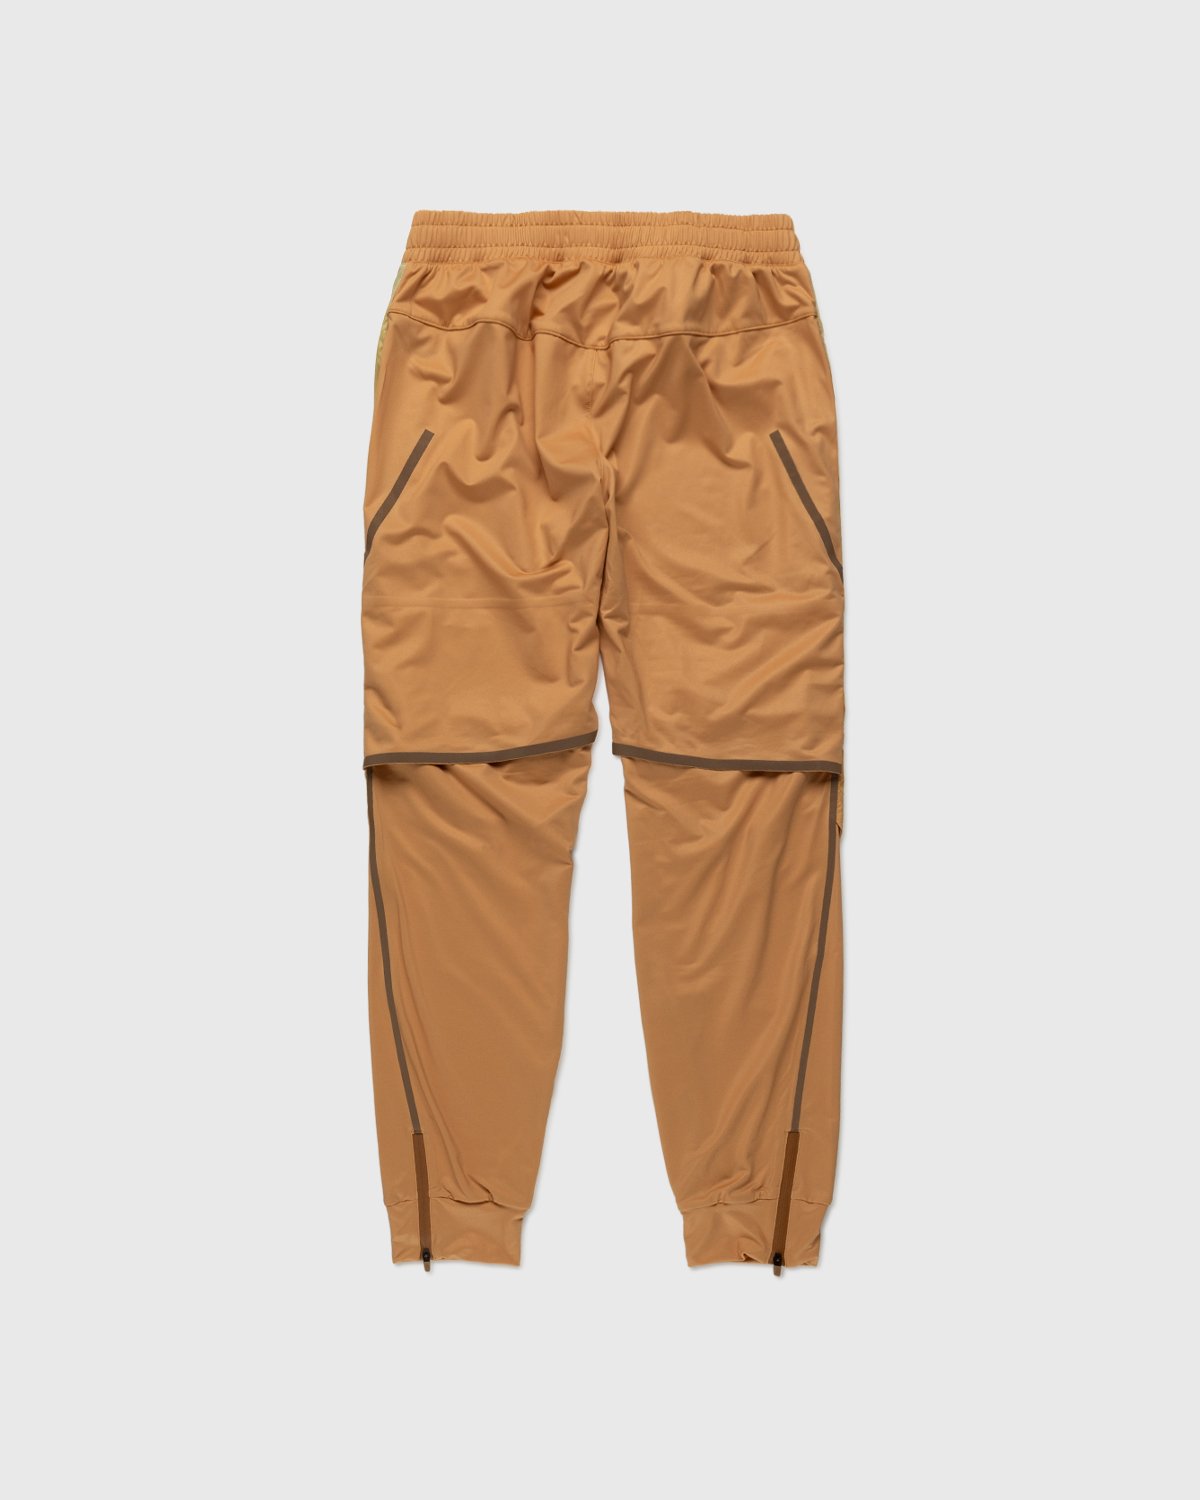 Loewe x On - Women's Technical Running Pants Gradient Orange - Clothing - Orange - Image 2